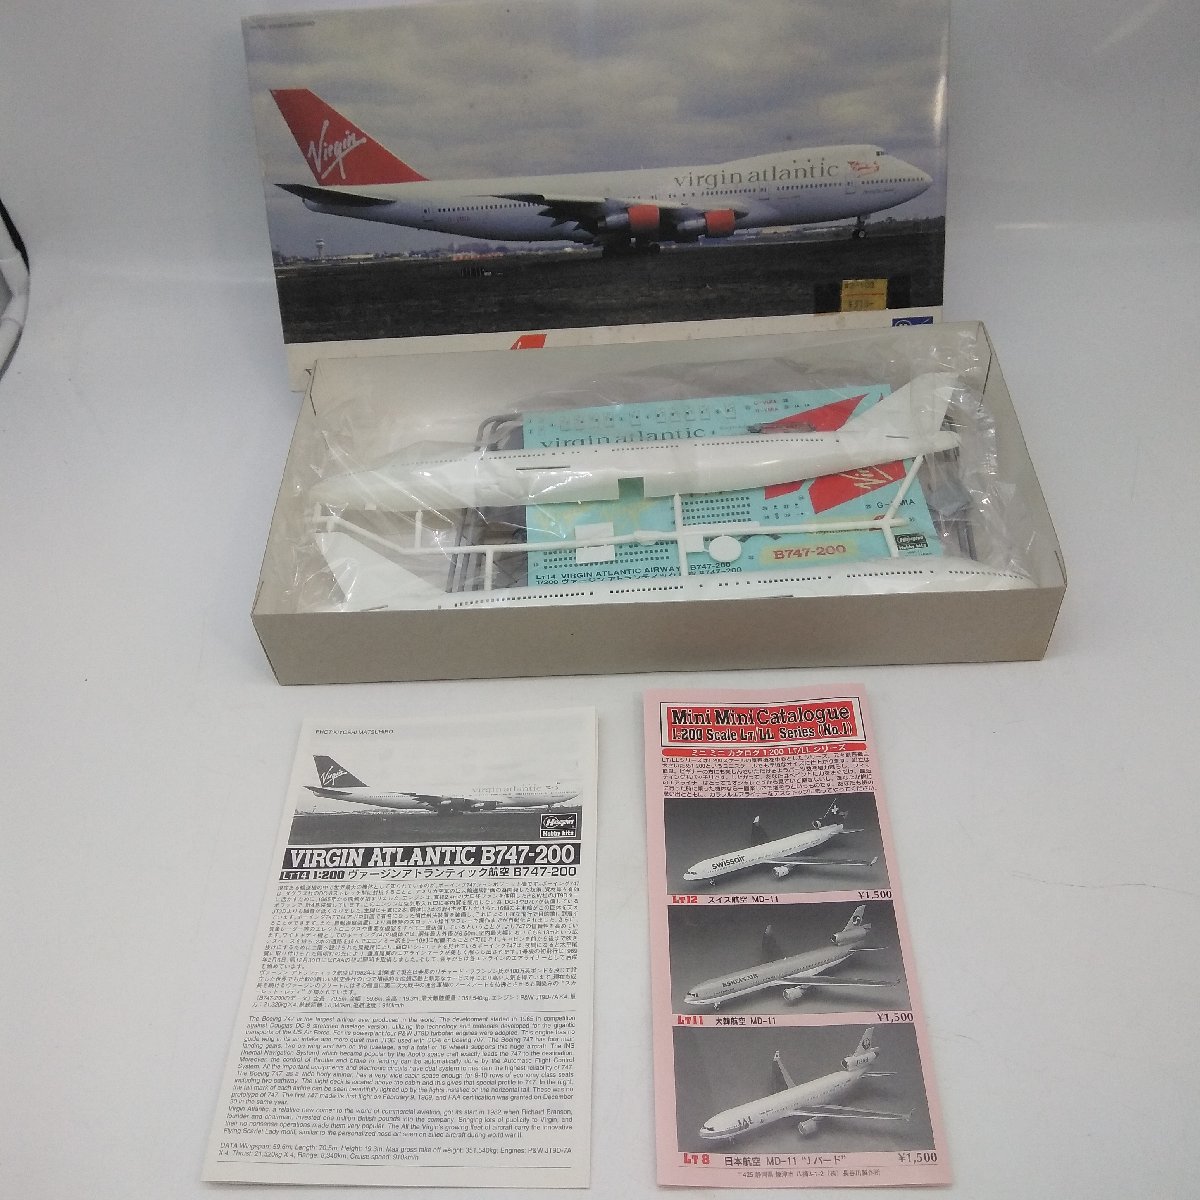 1043[ construction goods ] Hasegawa va- Gin Atlantic aviation bo- wing 747-200 1/200 plastic model airplane model 